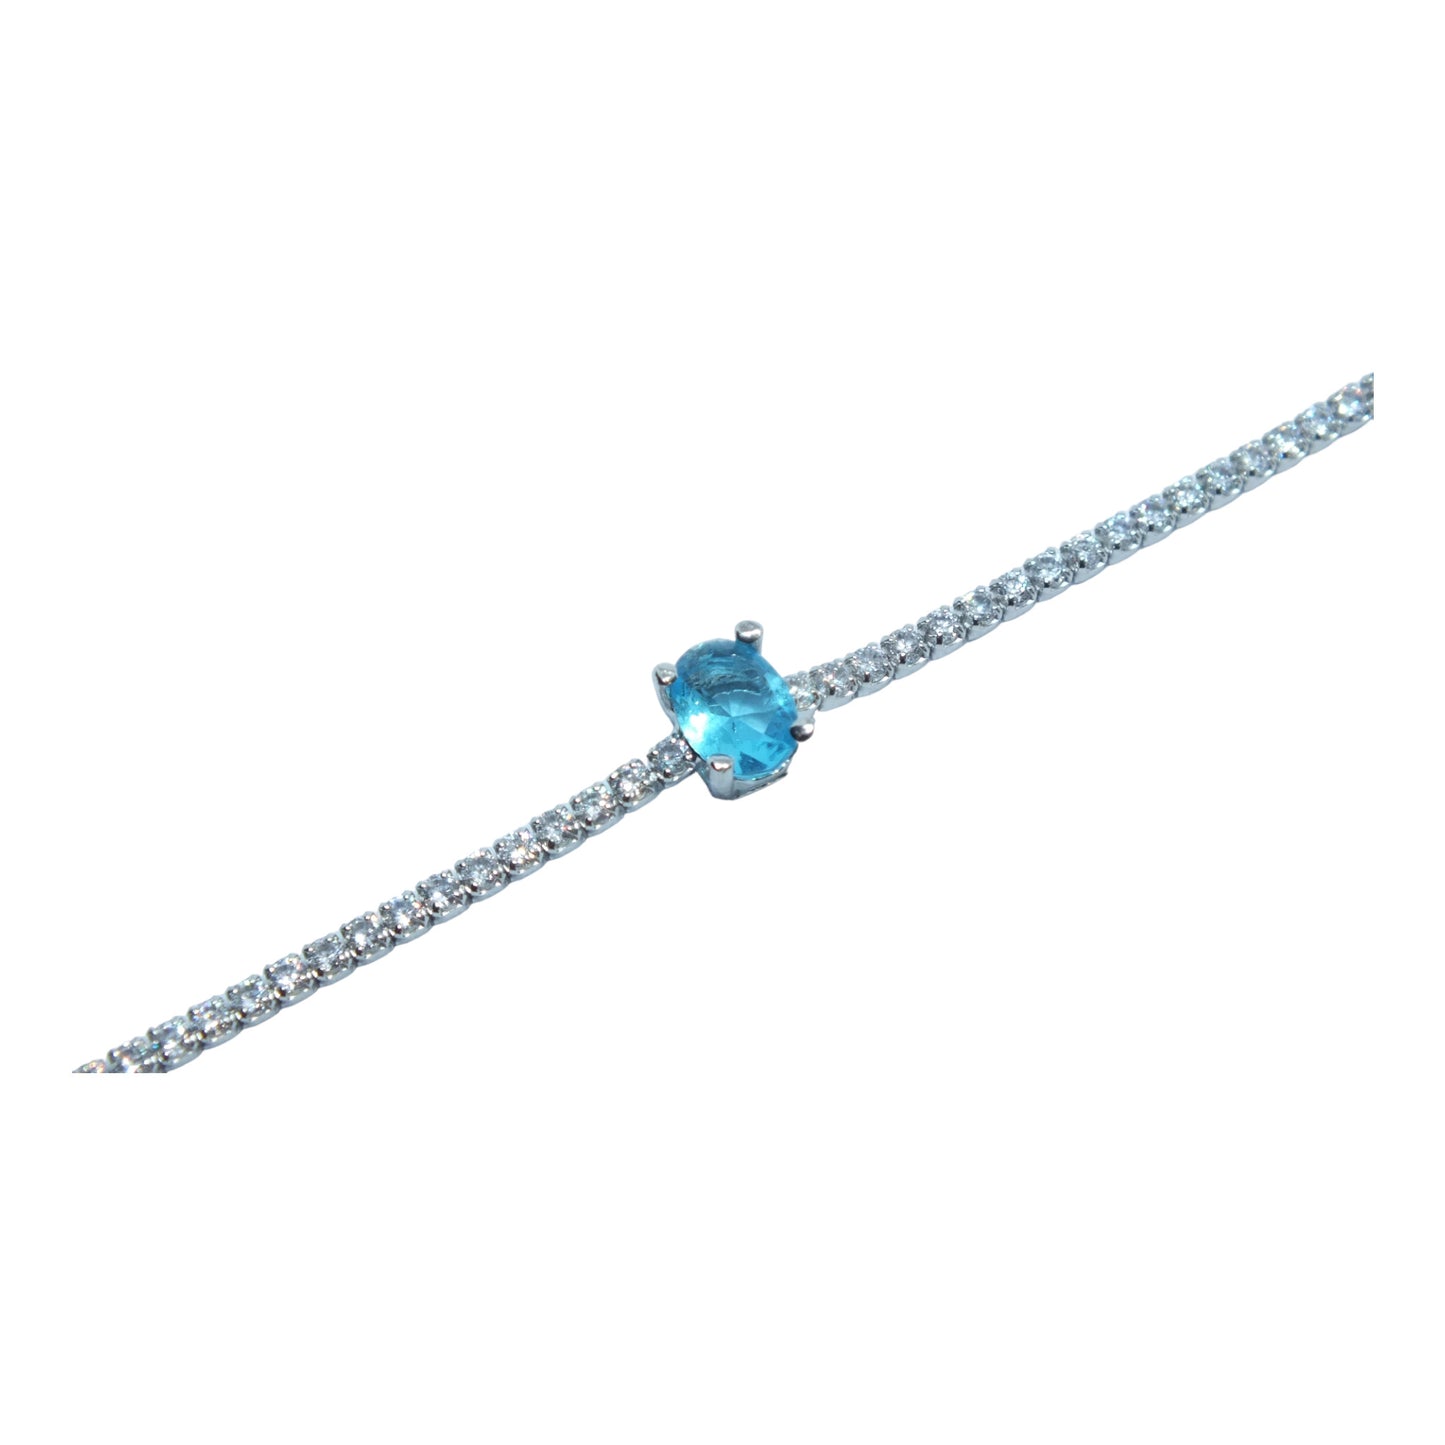 Silver Tennis Bracelet With Aquamarine Stone- اسوارة تنس فضة مع حجر اكوامارين⁩⁩